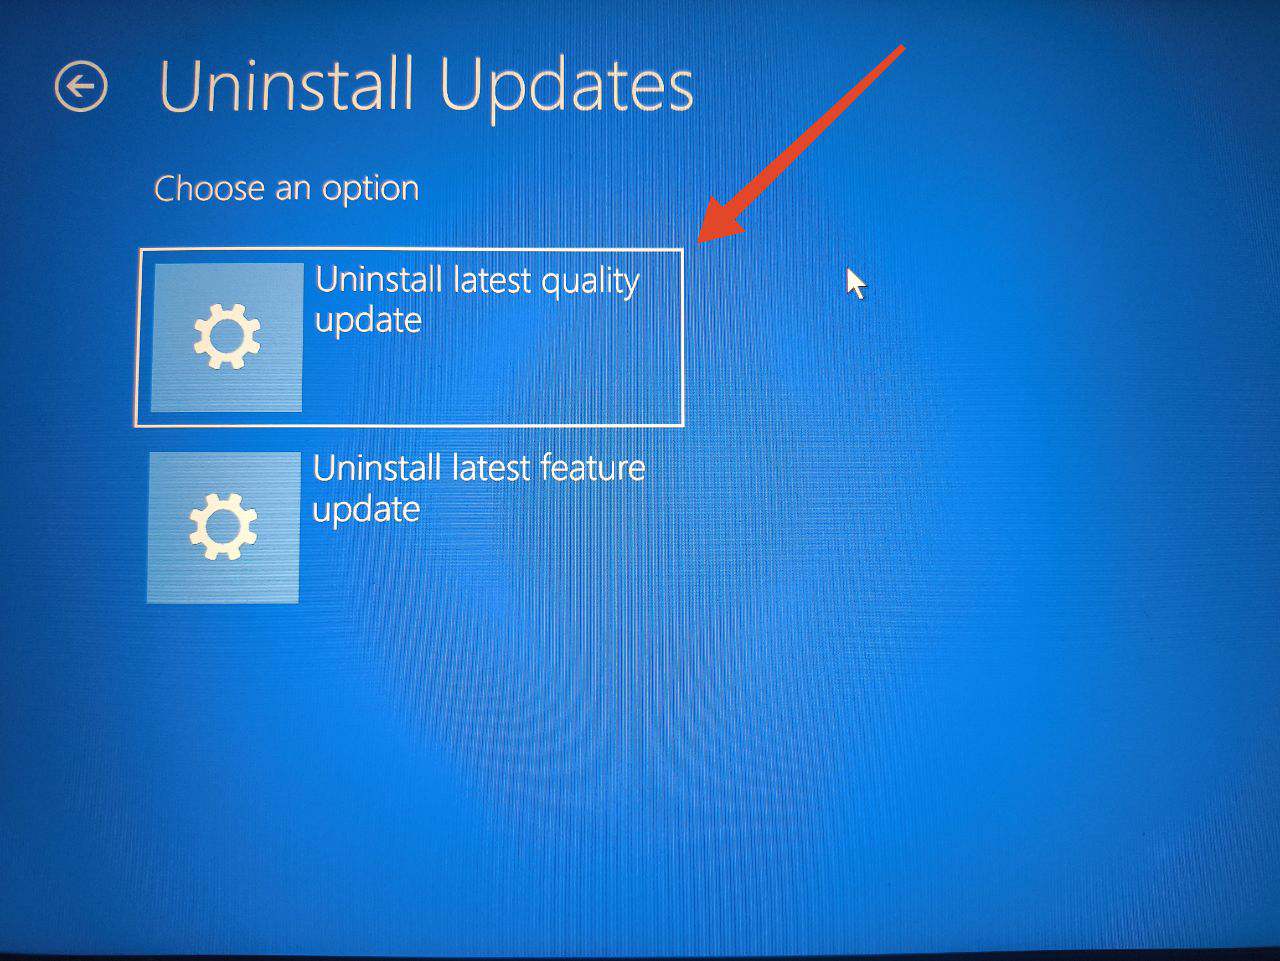 uninstall-latest-quality-update